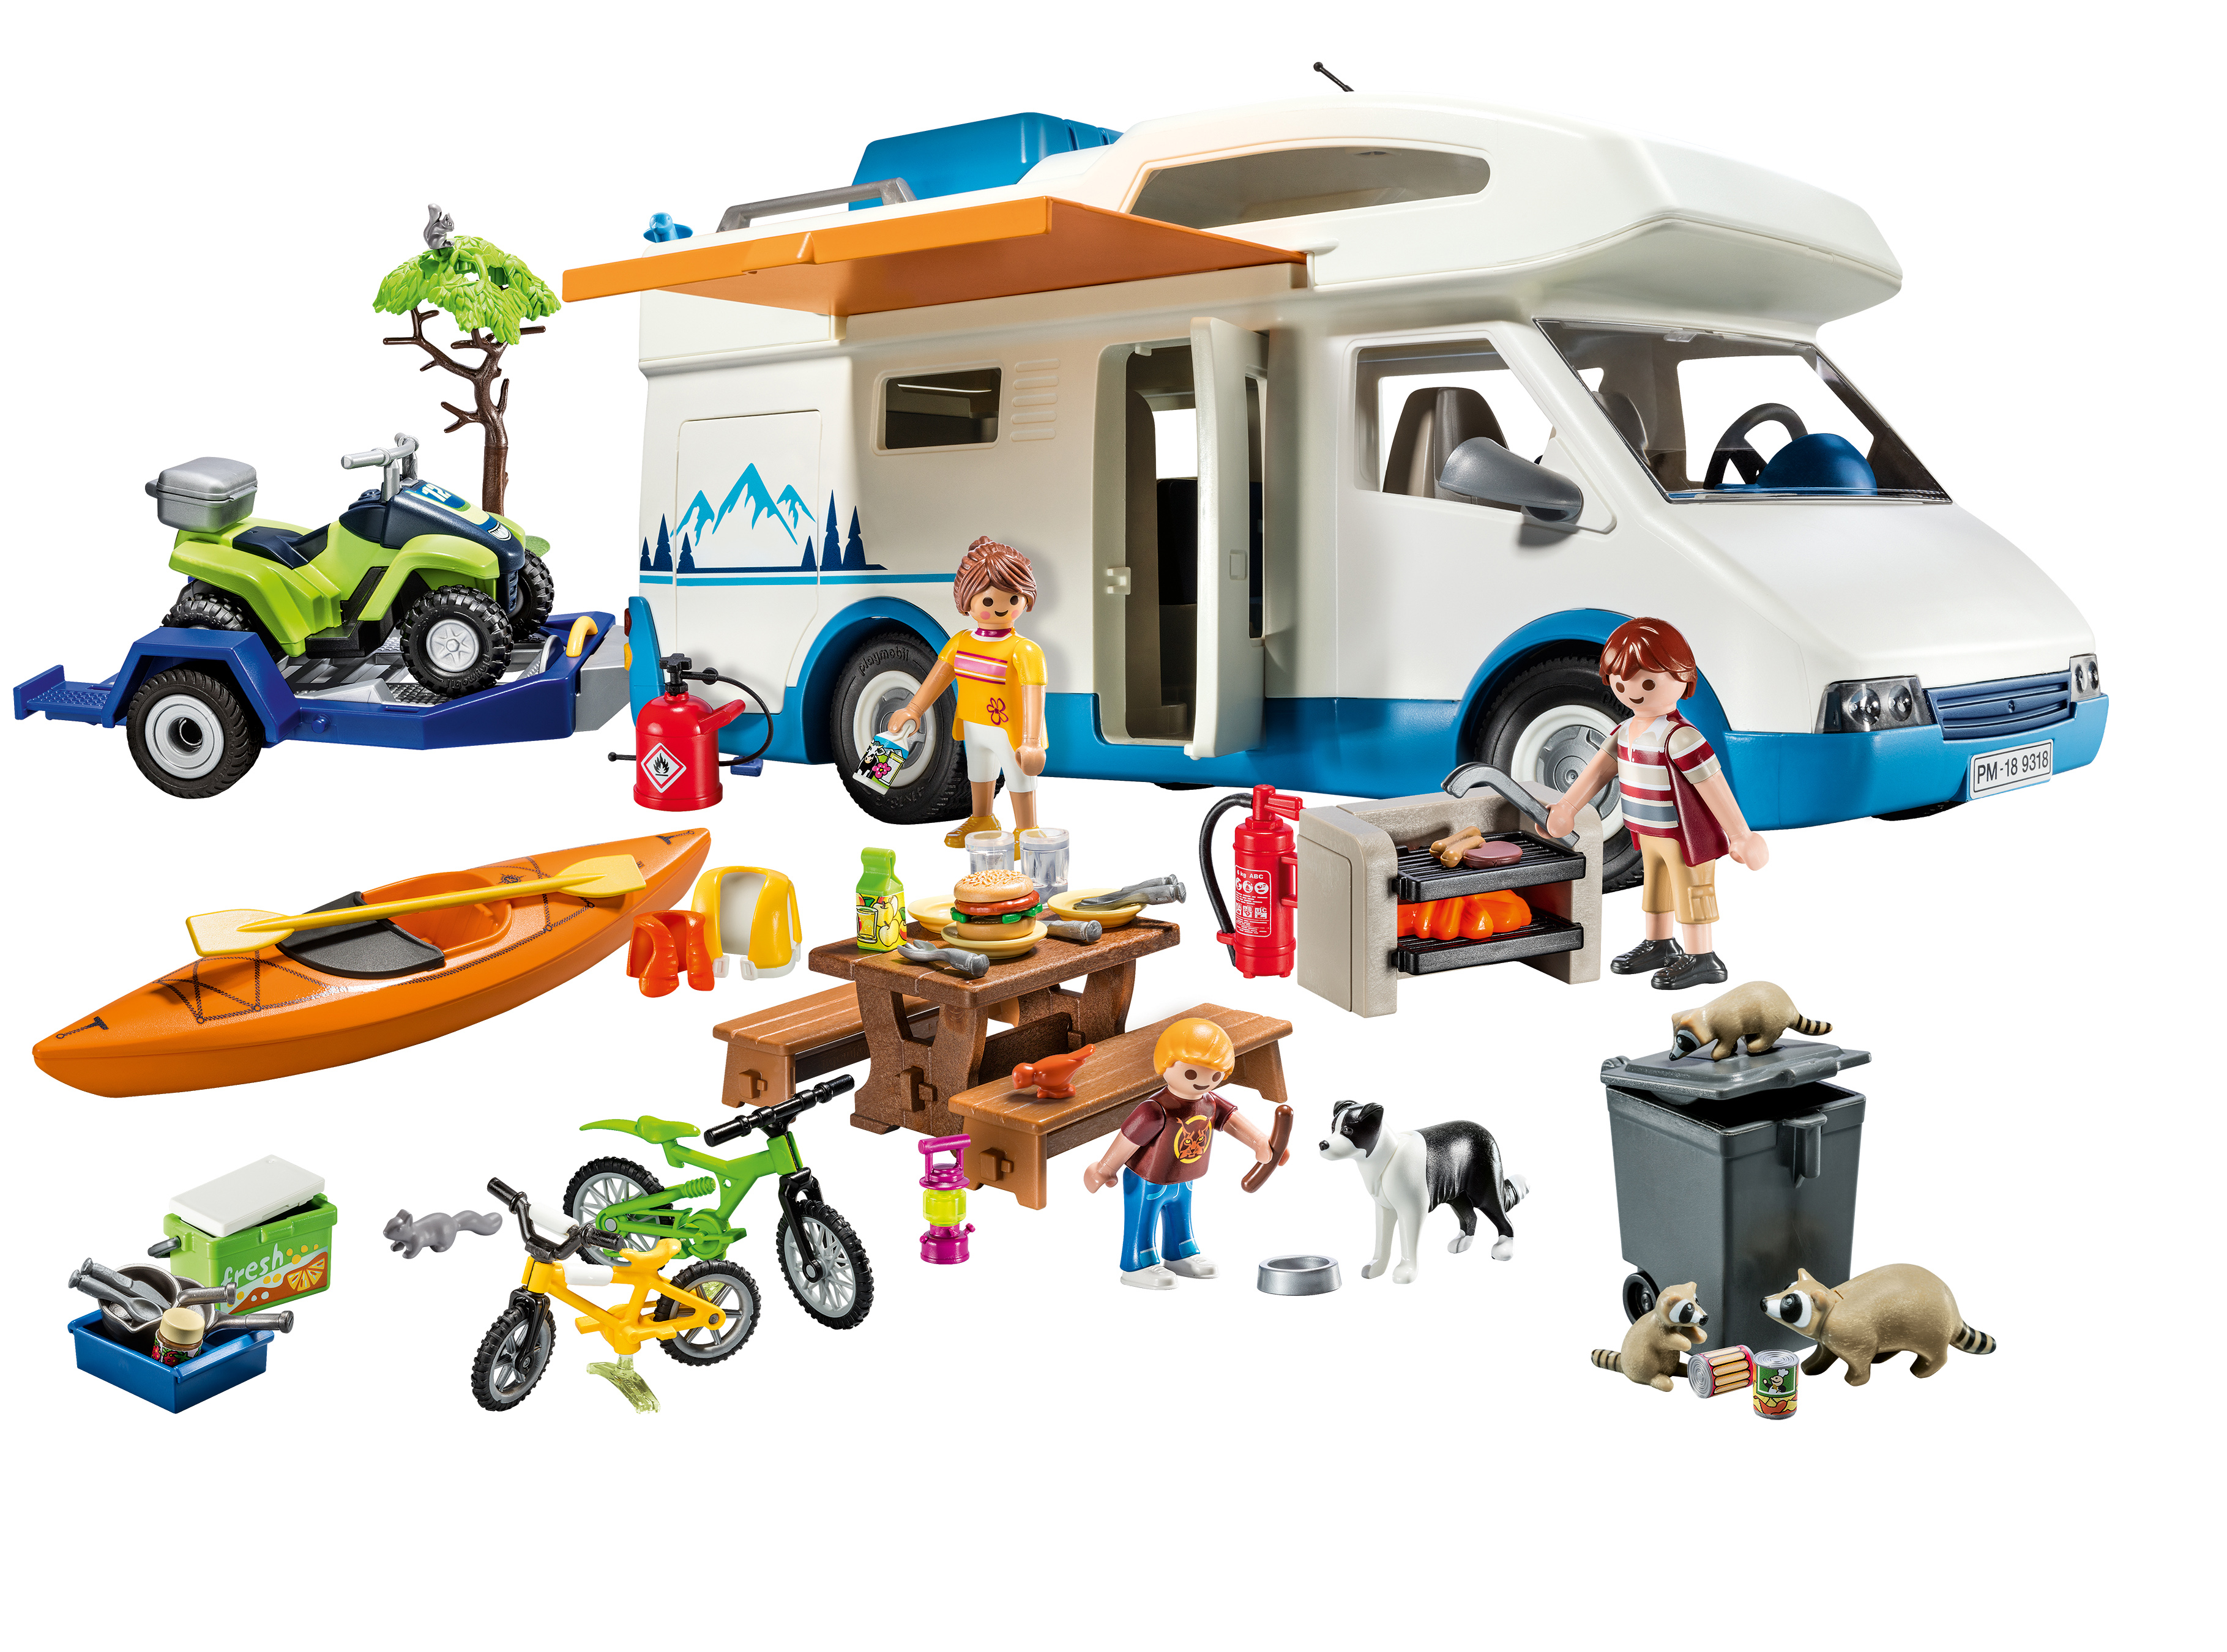 Playmobil Camping Adventure for $44.95 (Reg. $70)